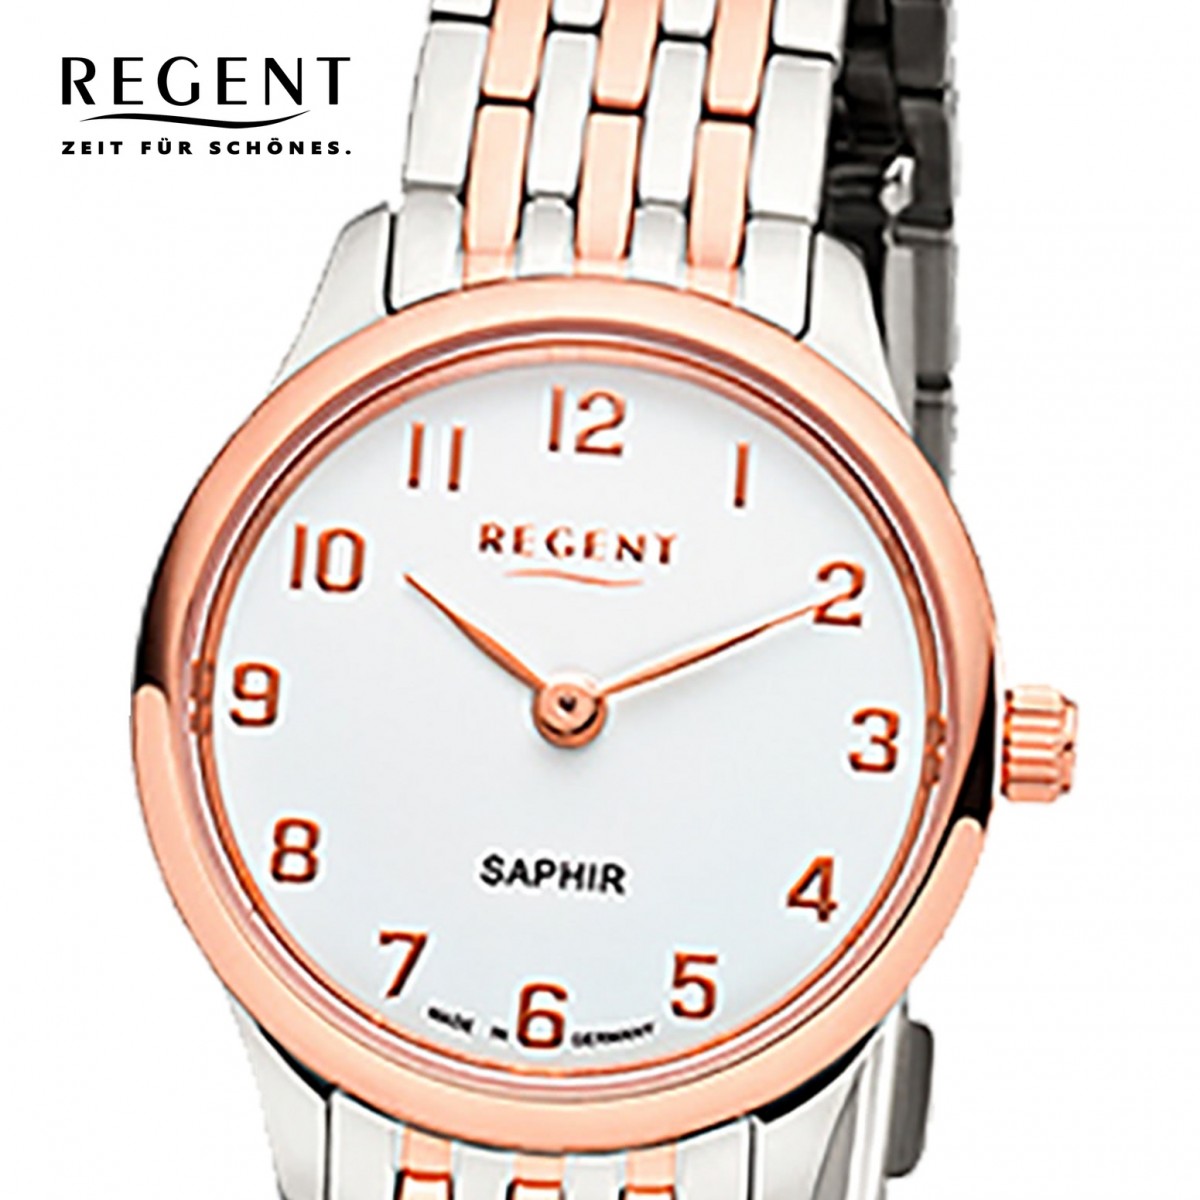 Metall Analog Regent silber Armbanduhr rosegold URGM1460 Quarz-Uhr GM-1460 Damen